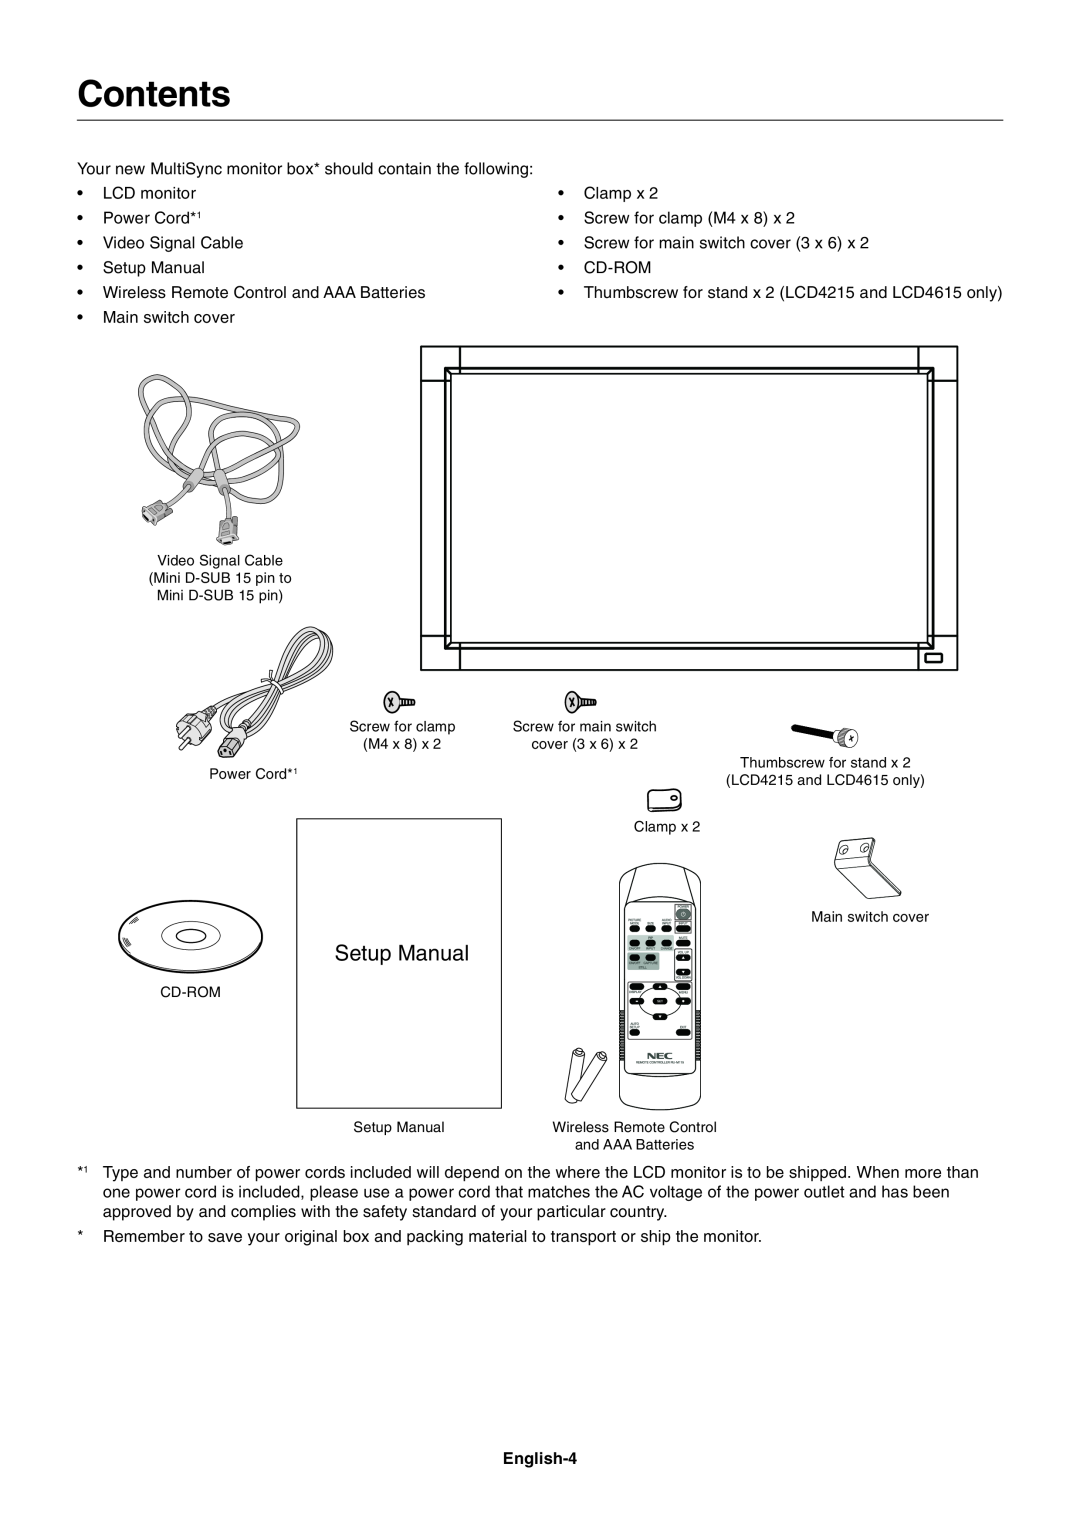 NEC LCD4615 user manual Contents, Setup Manual 